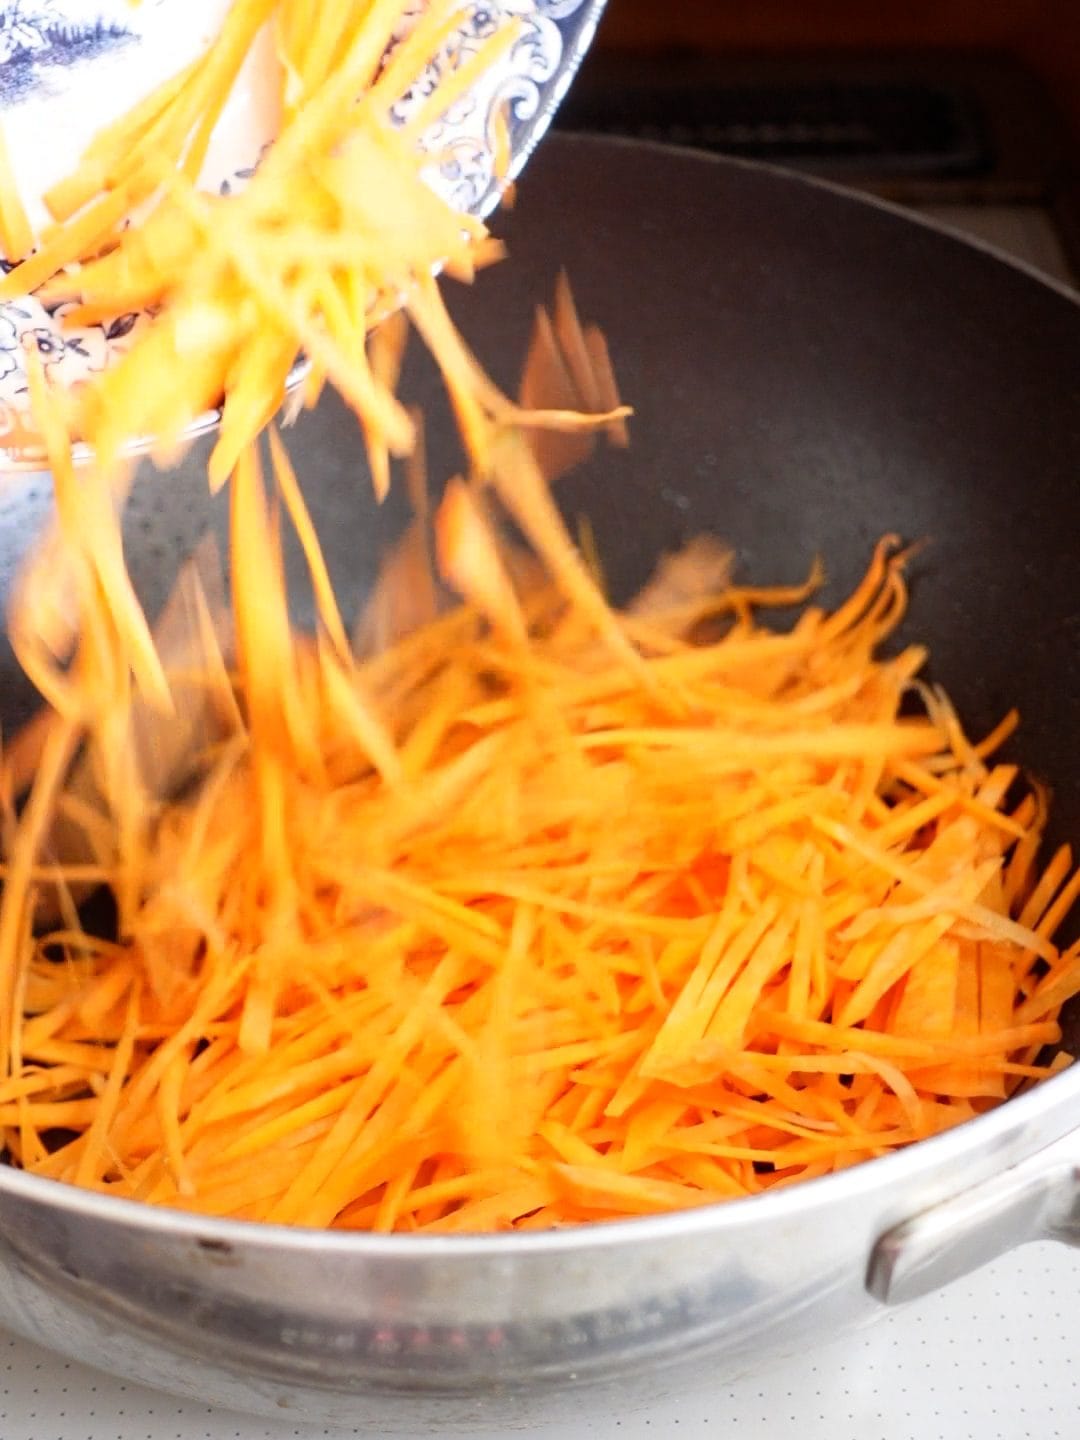 Stir fry carrots